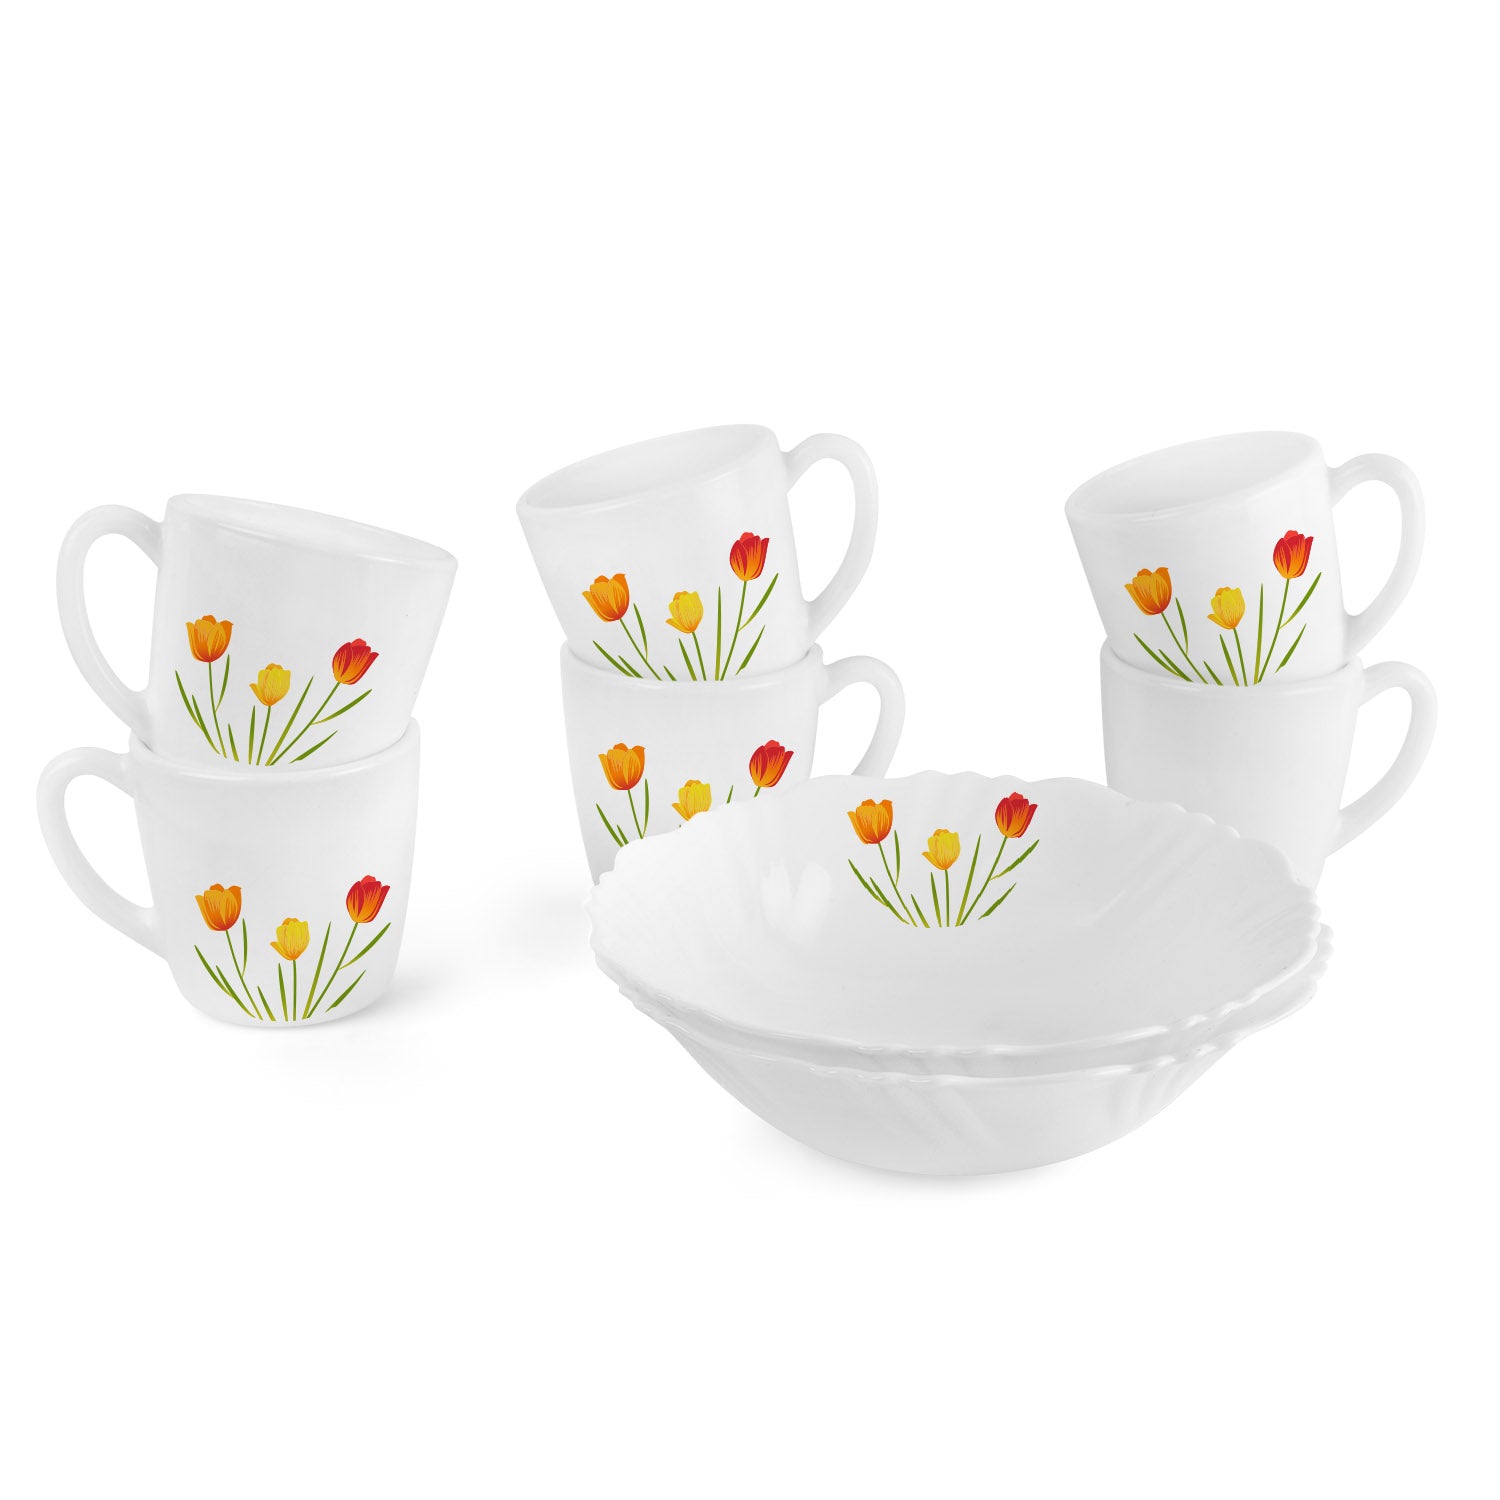 Imperial Series Quick Bite Bowl & Mug Gift set, 8 Pieces Tulip Garden / 8 Pieces